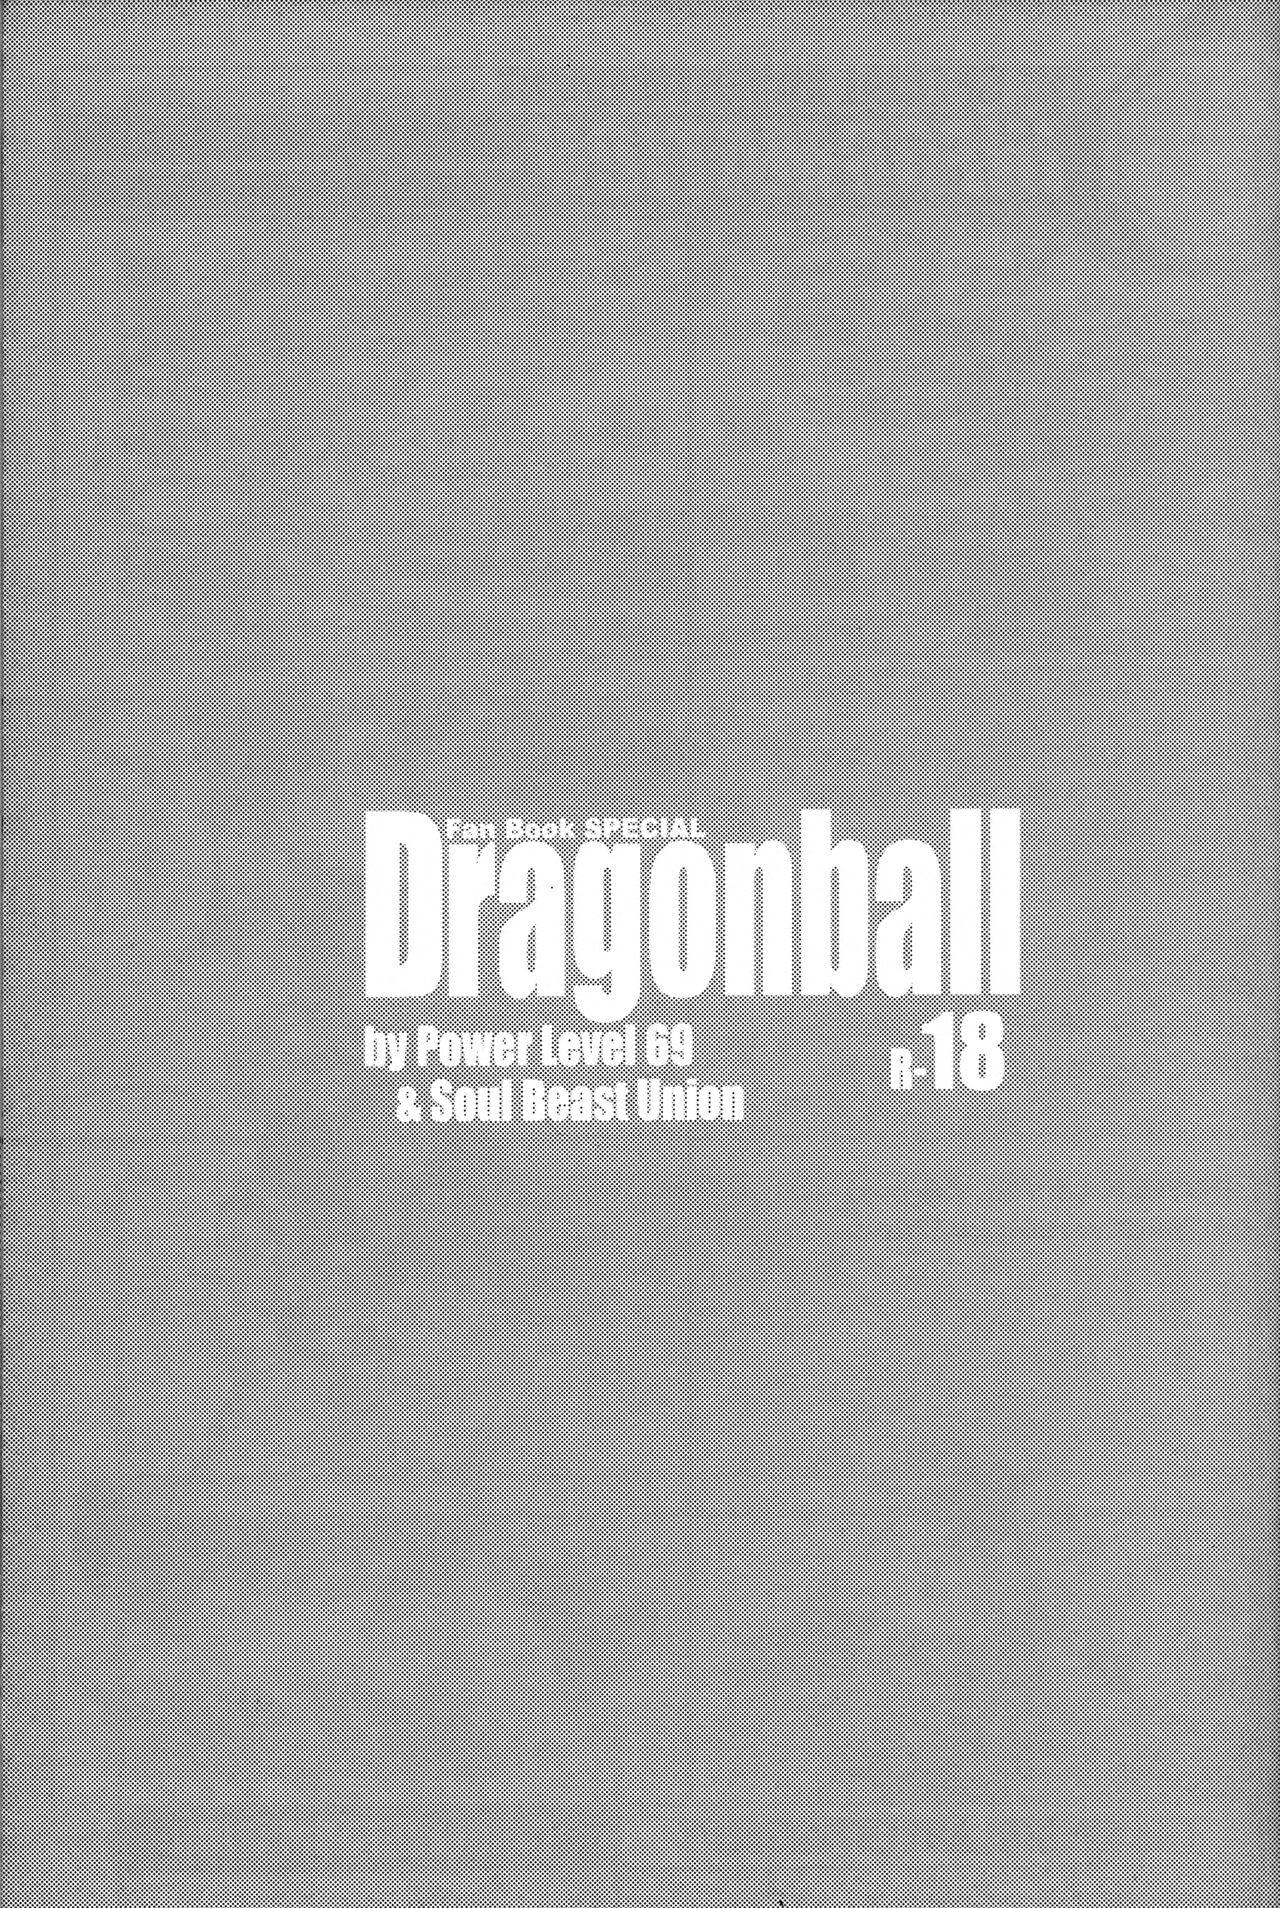 Dragonball Fan Book SPECIAL 3